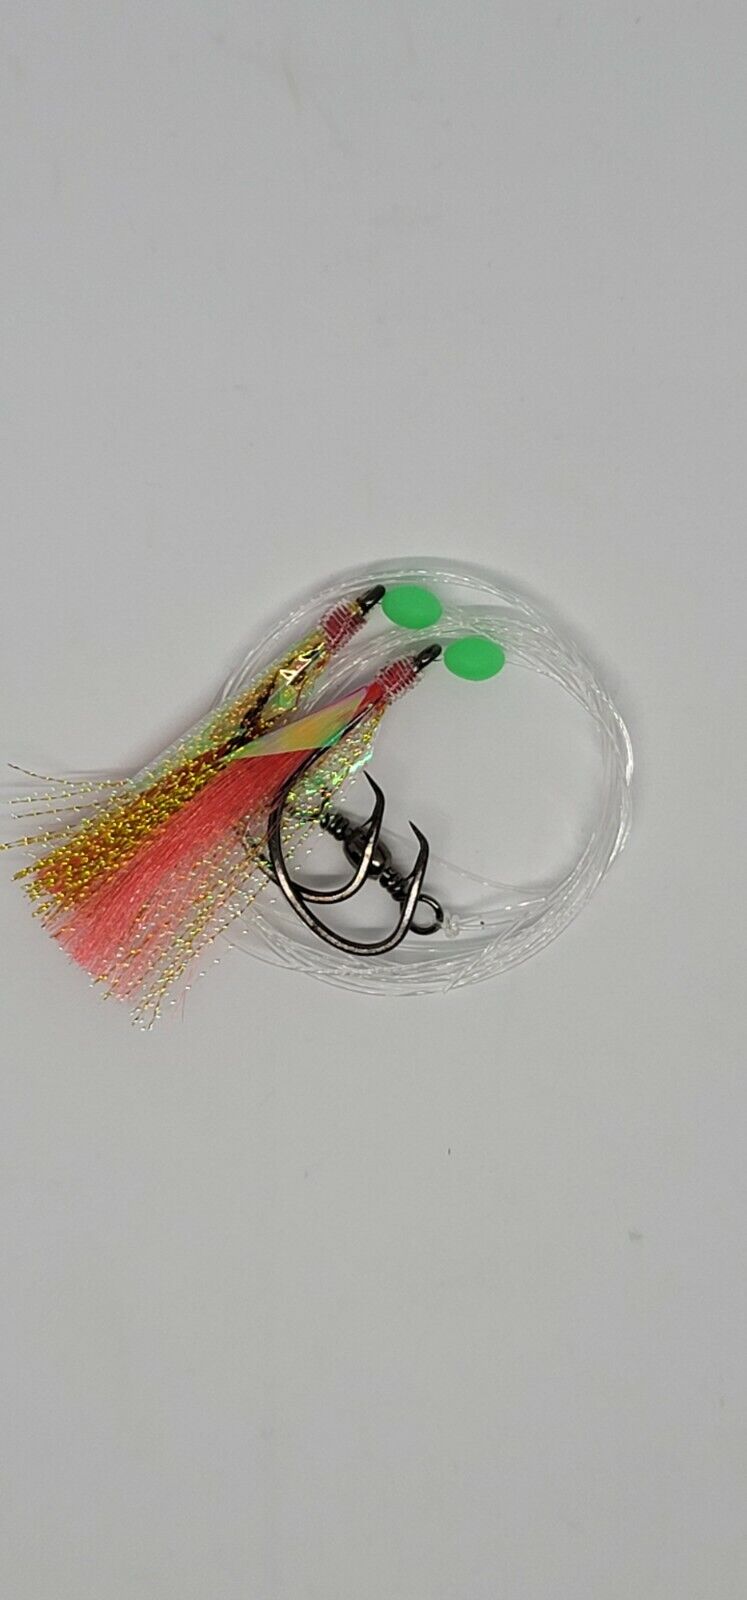 Hi Lo Sabiki Rig Fishing 6\0 Hook w\ Flasher 40lb Mono Glow Bead Fluke Sea Bass